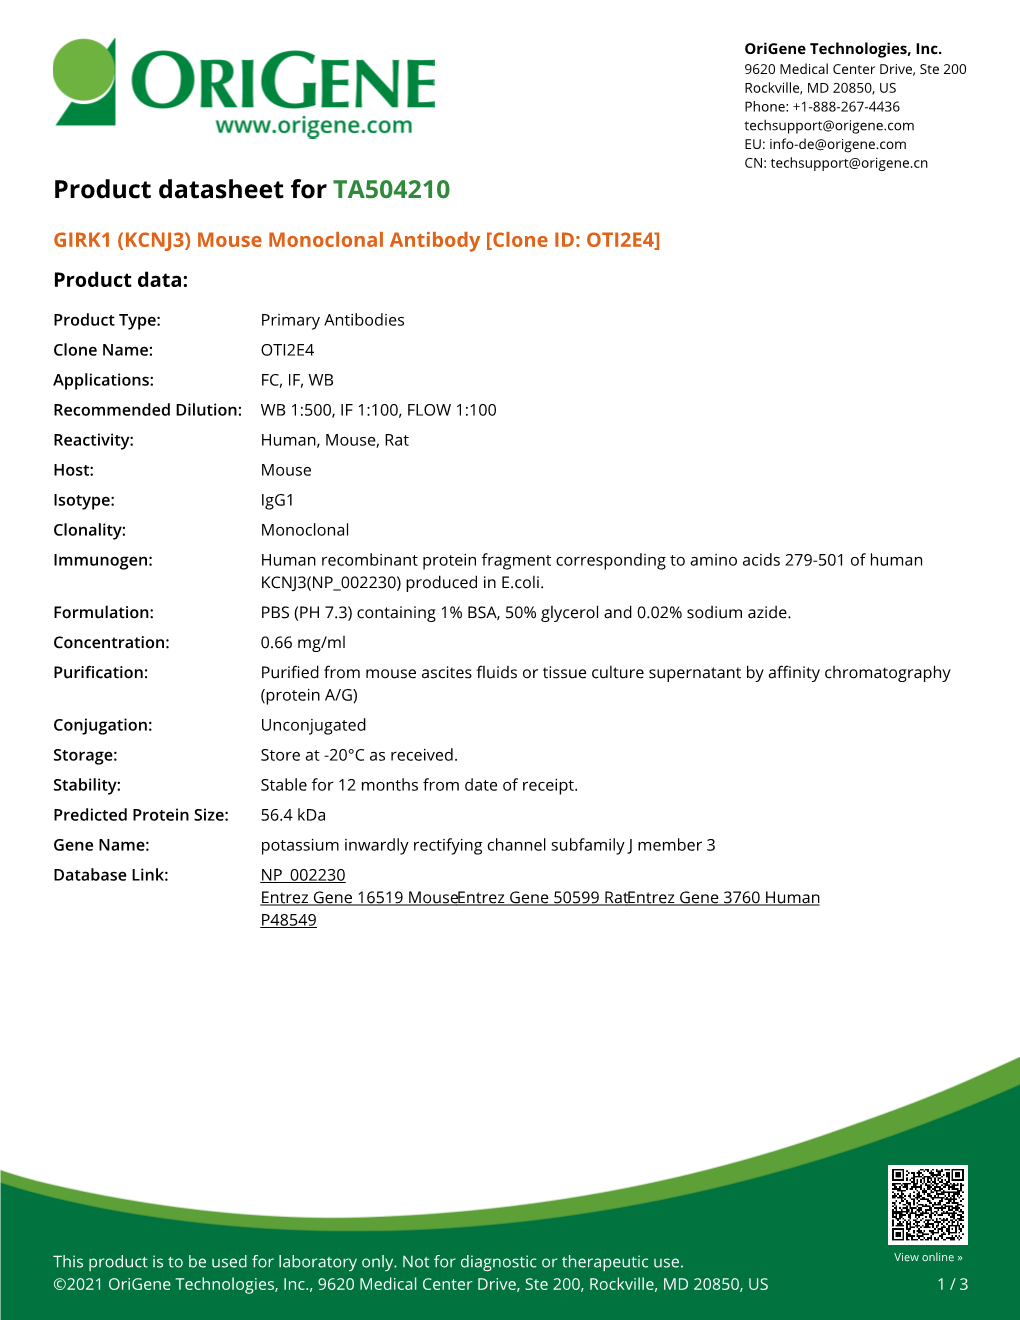 GIRK1 (KCNJ3) Mouse Monoclonal Antibody [Clone ID: OTI2E4] Product Data